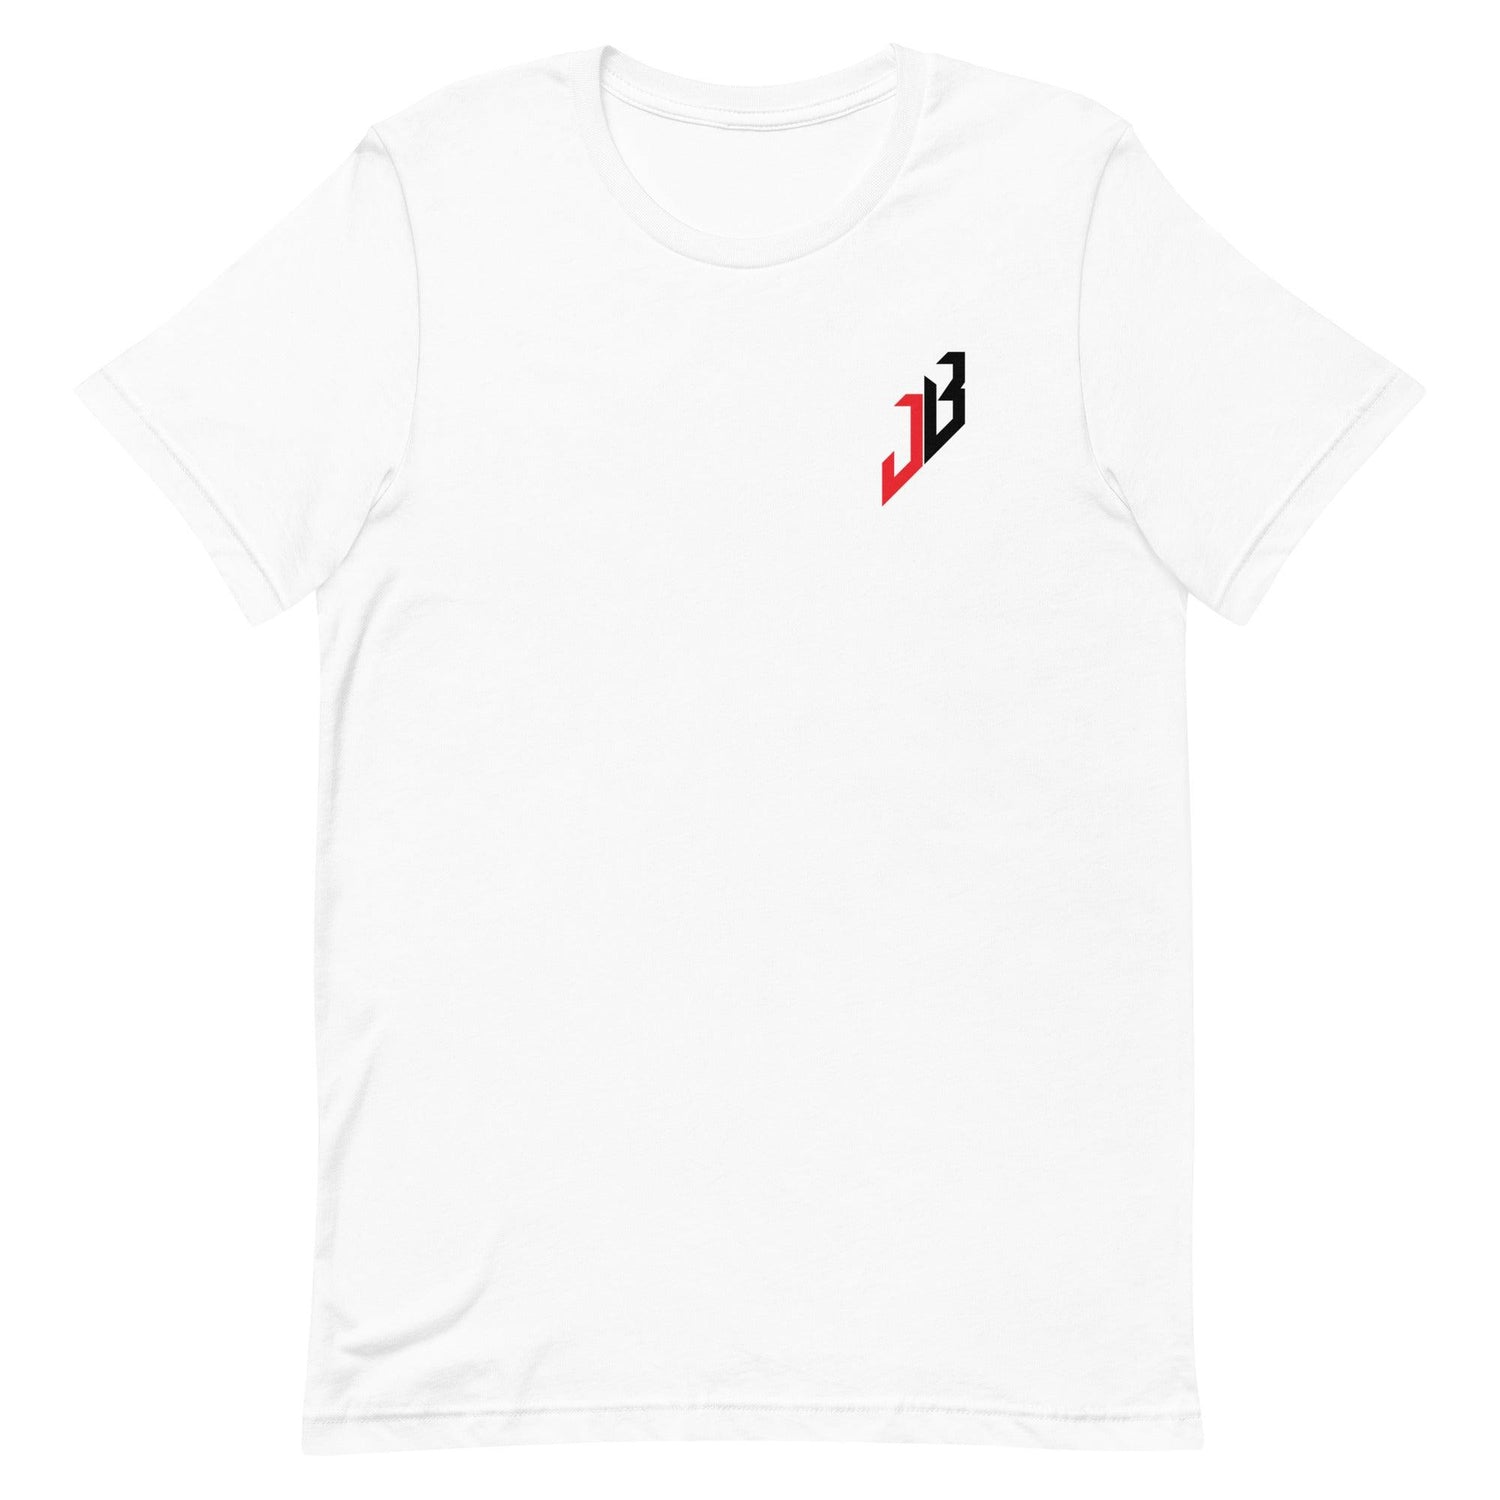 Jerand Bradley "Essential" t-shirt - Fan Arch